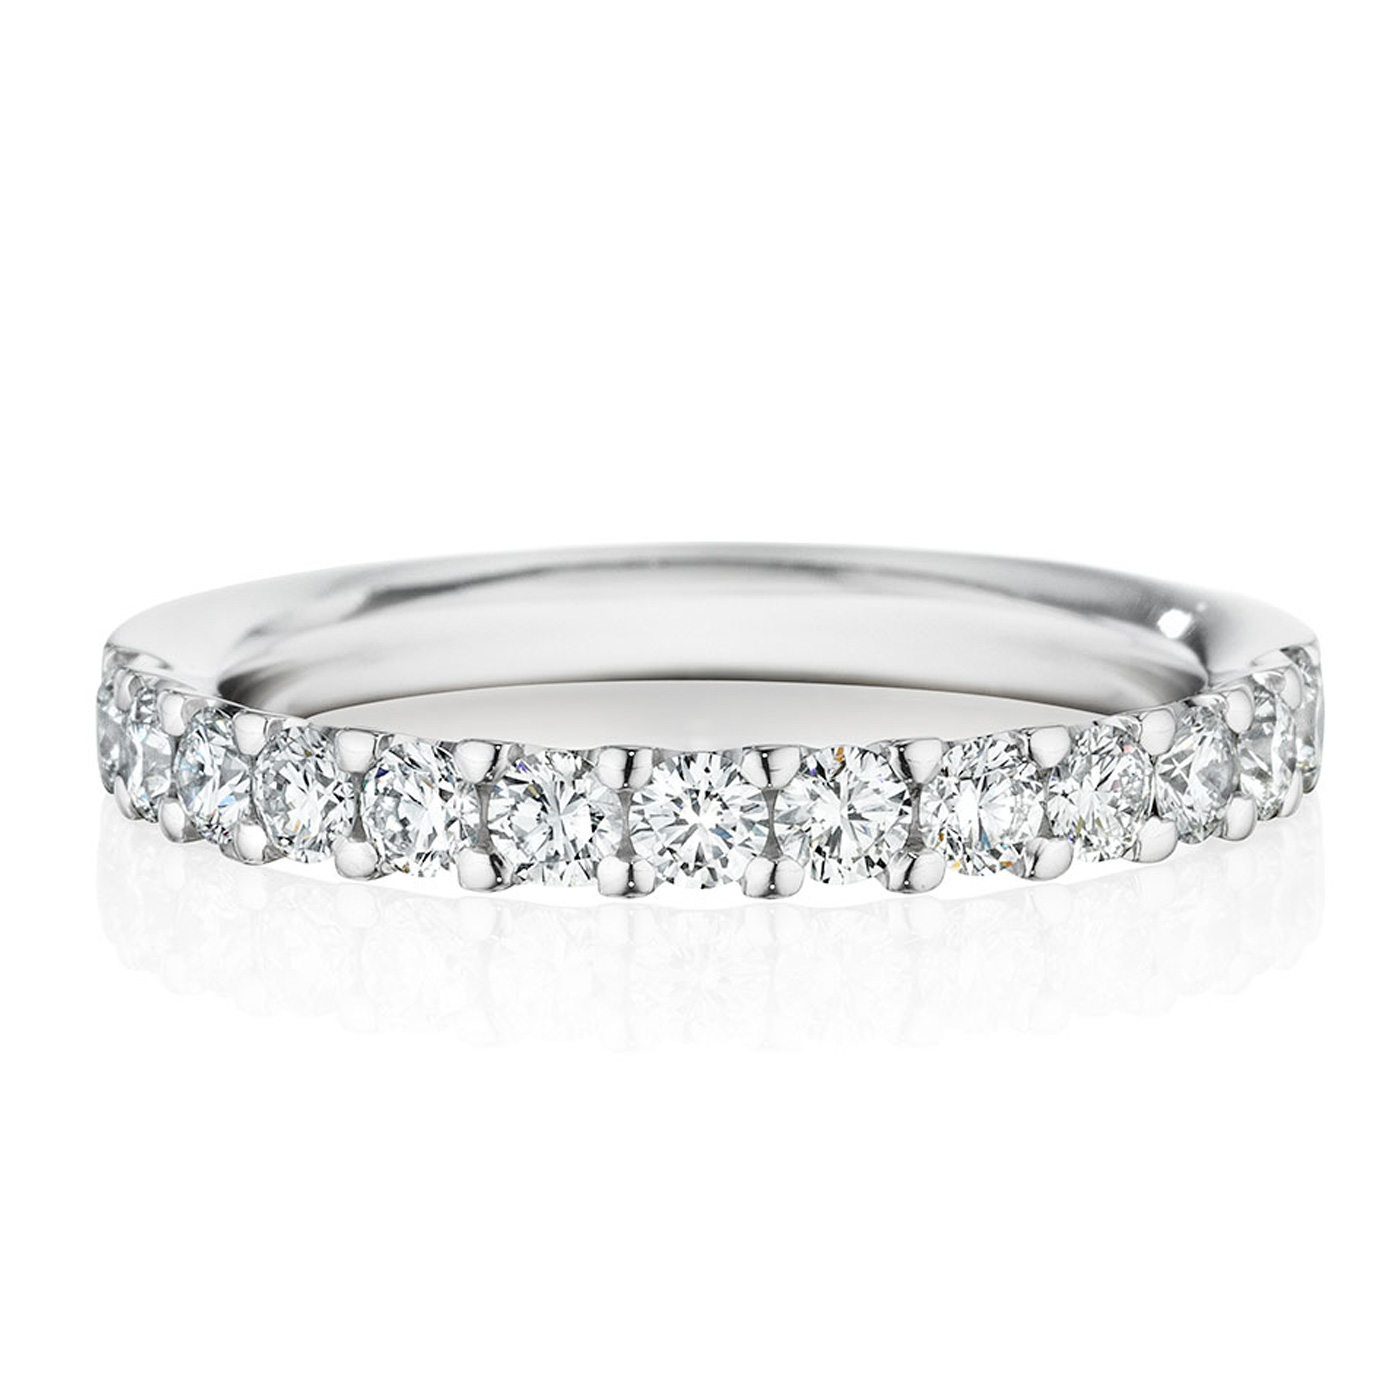 246956 Christian Bauer 14 Karat Diamond  Wedding Ring / Band